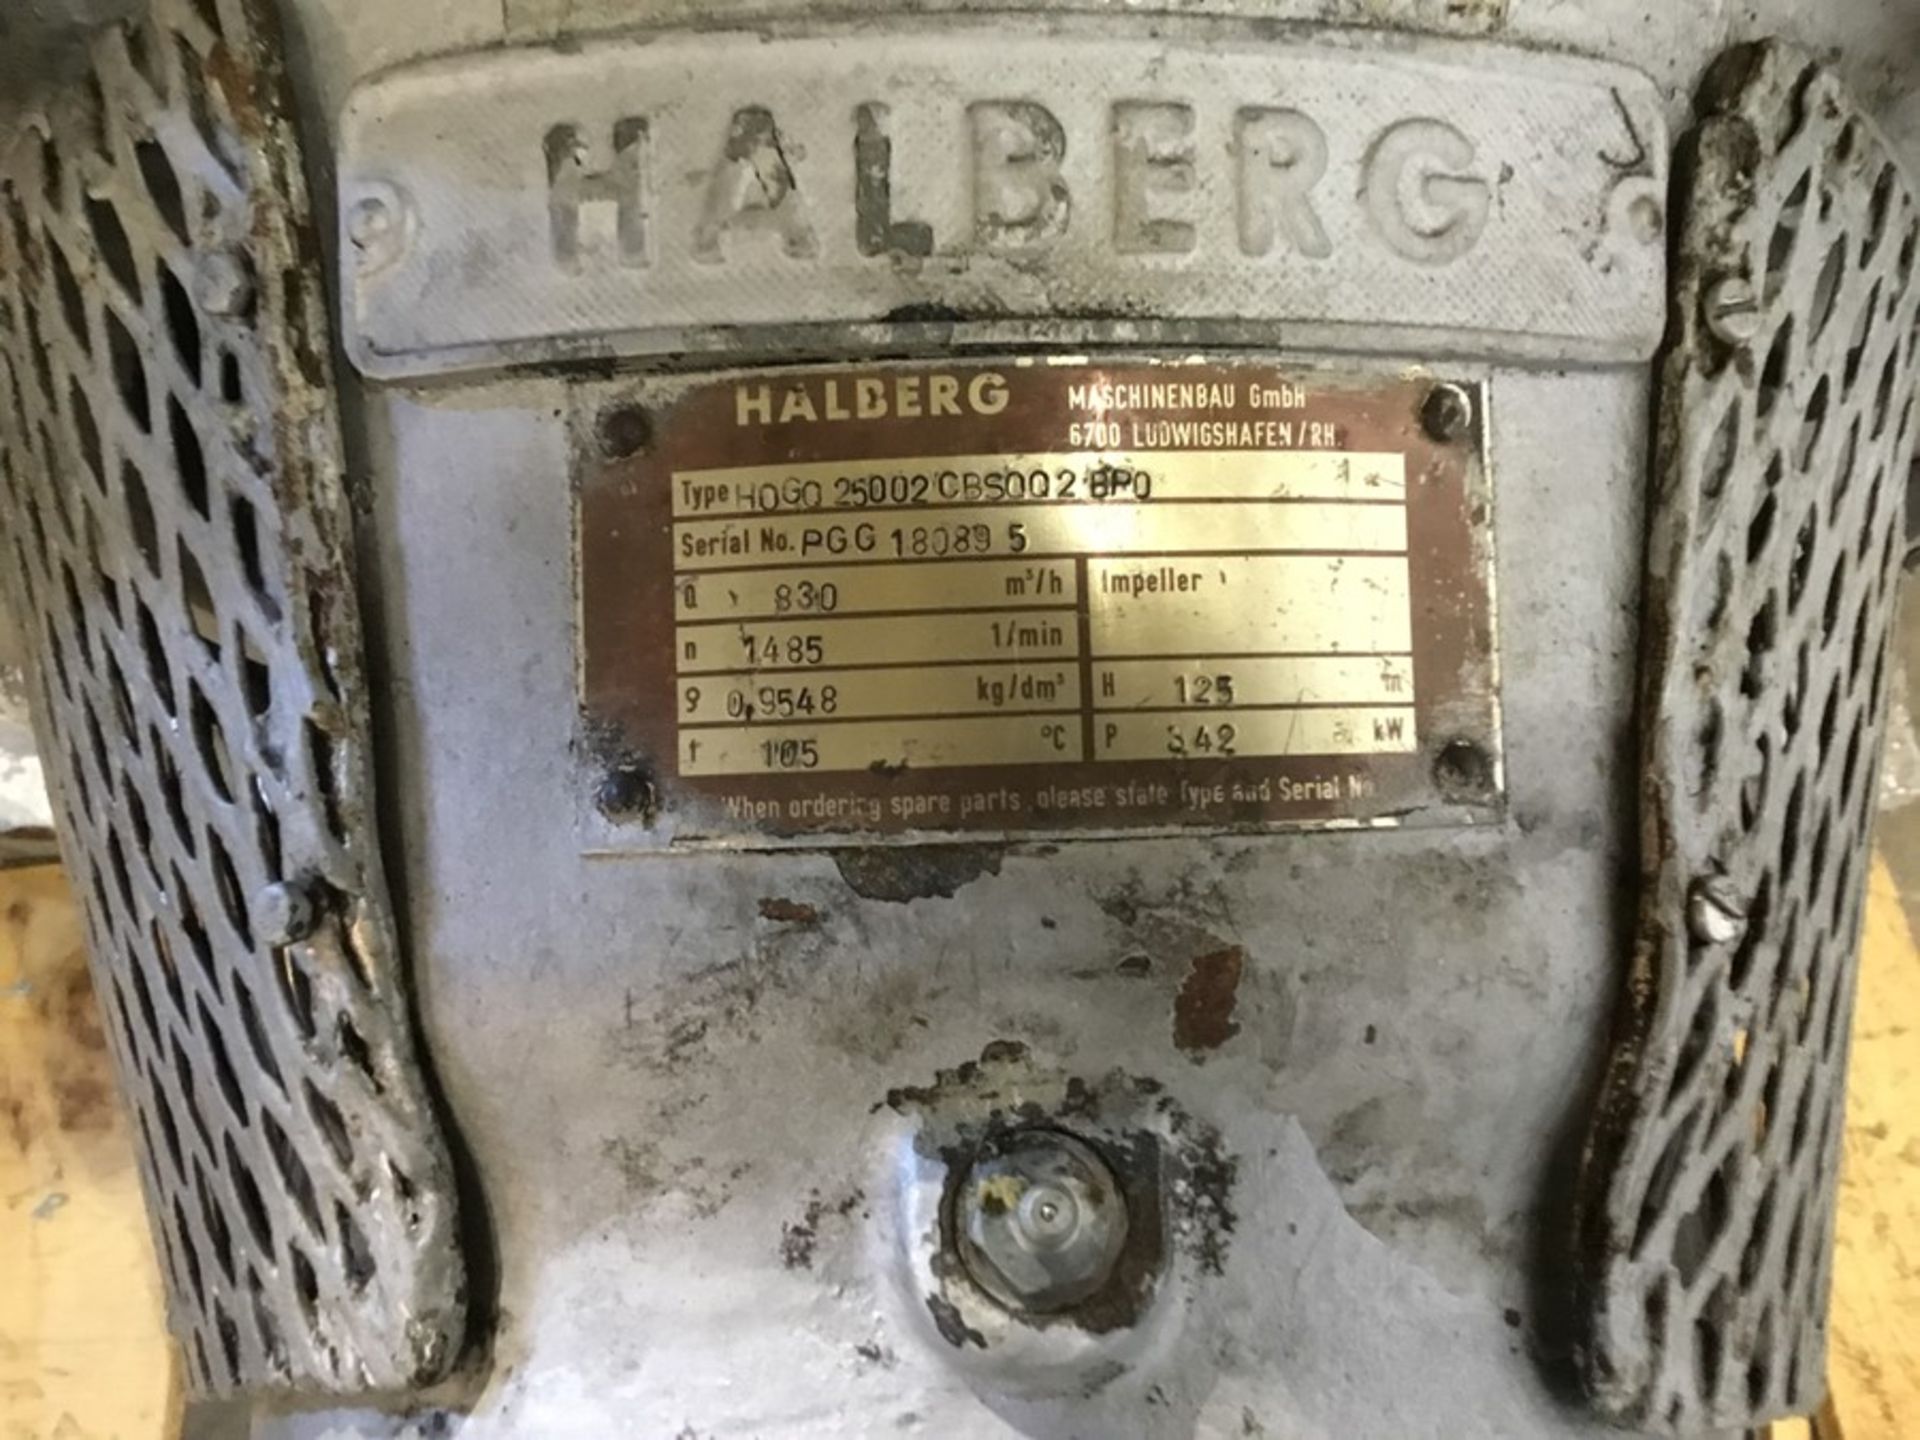 Halberg model HOGQ25002cbsqq2bqo Pump Flow: 830m/hour-0.9548kg/dm3 Pressure:125Metre head, - Image 5 of 24